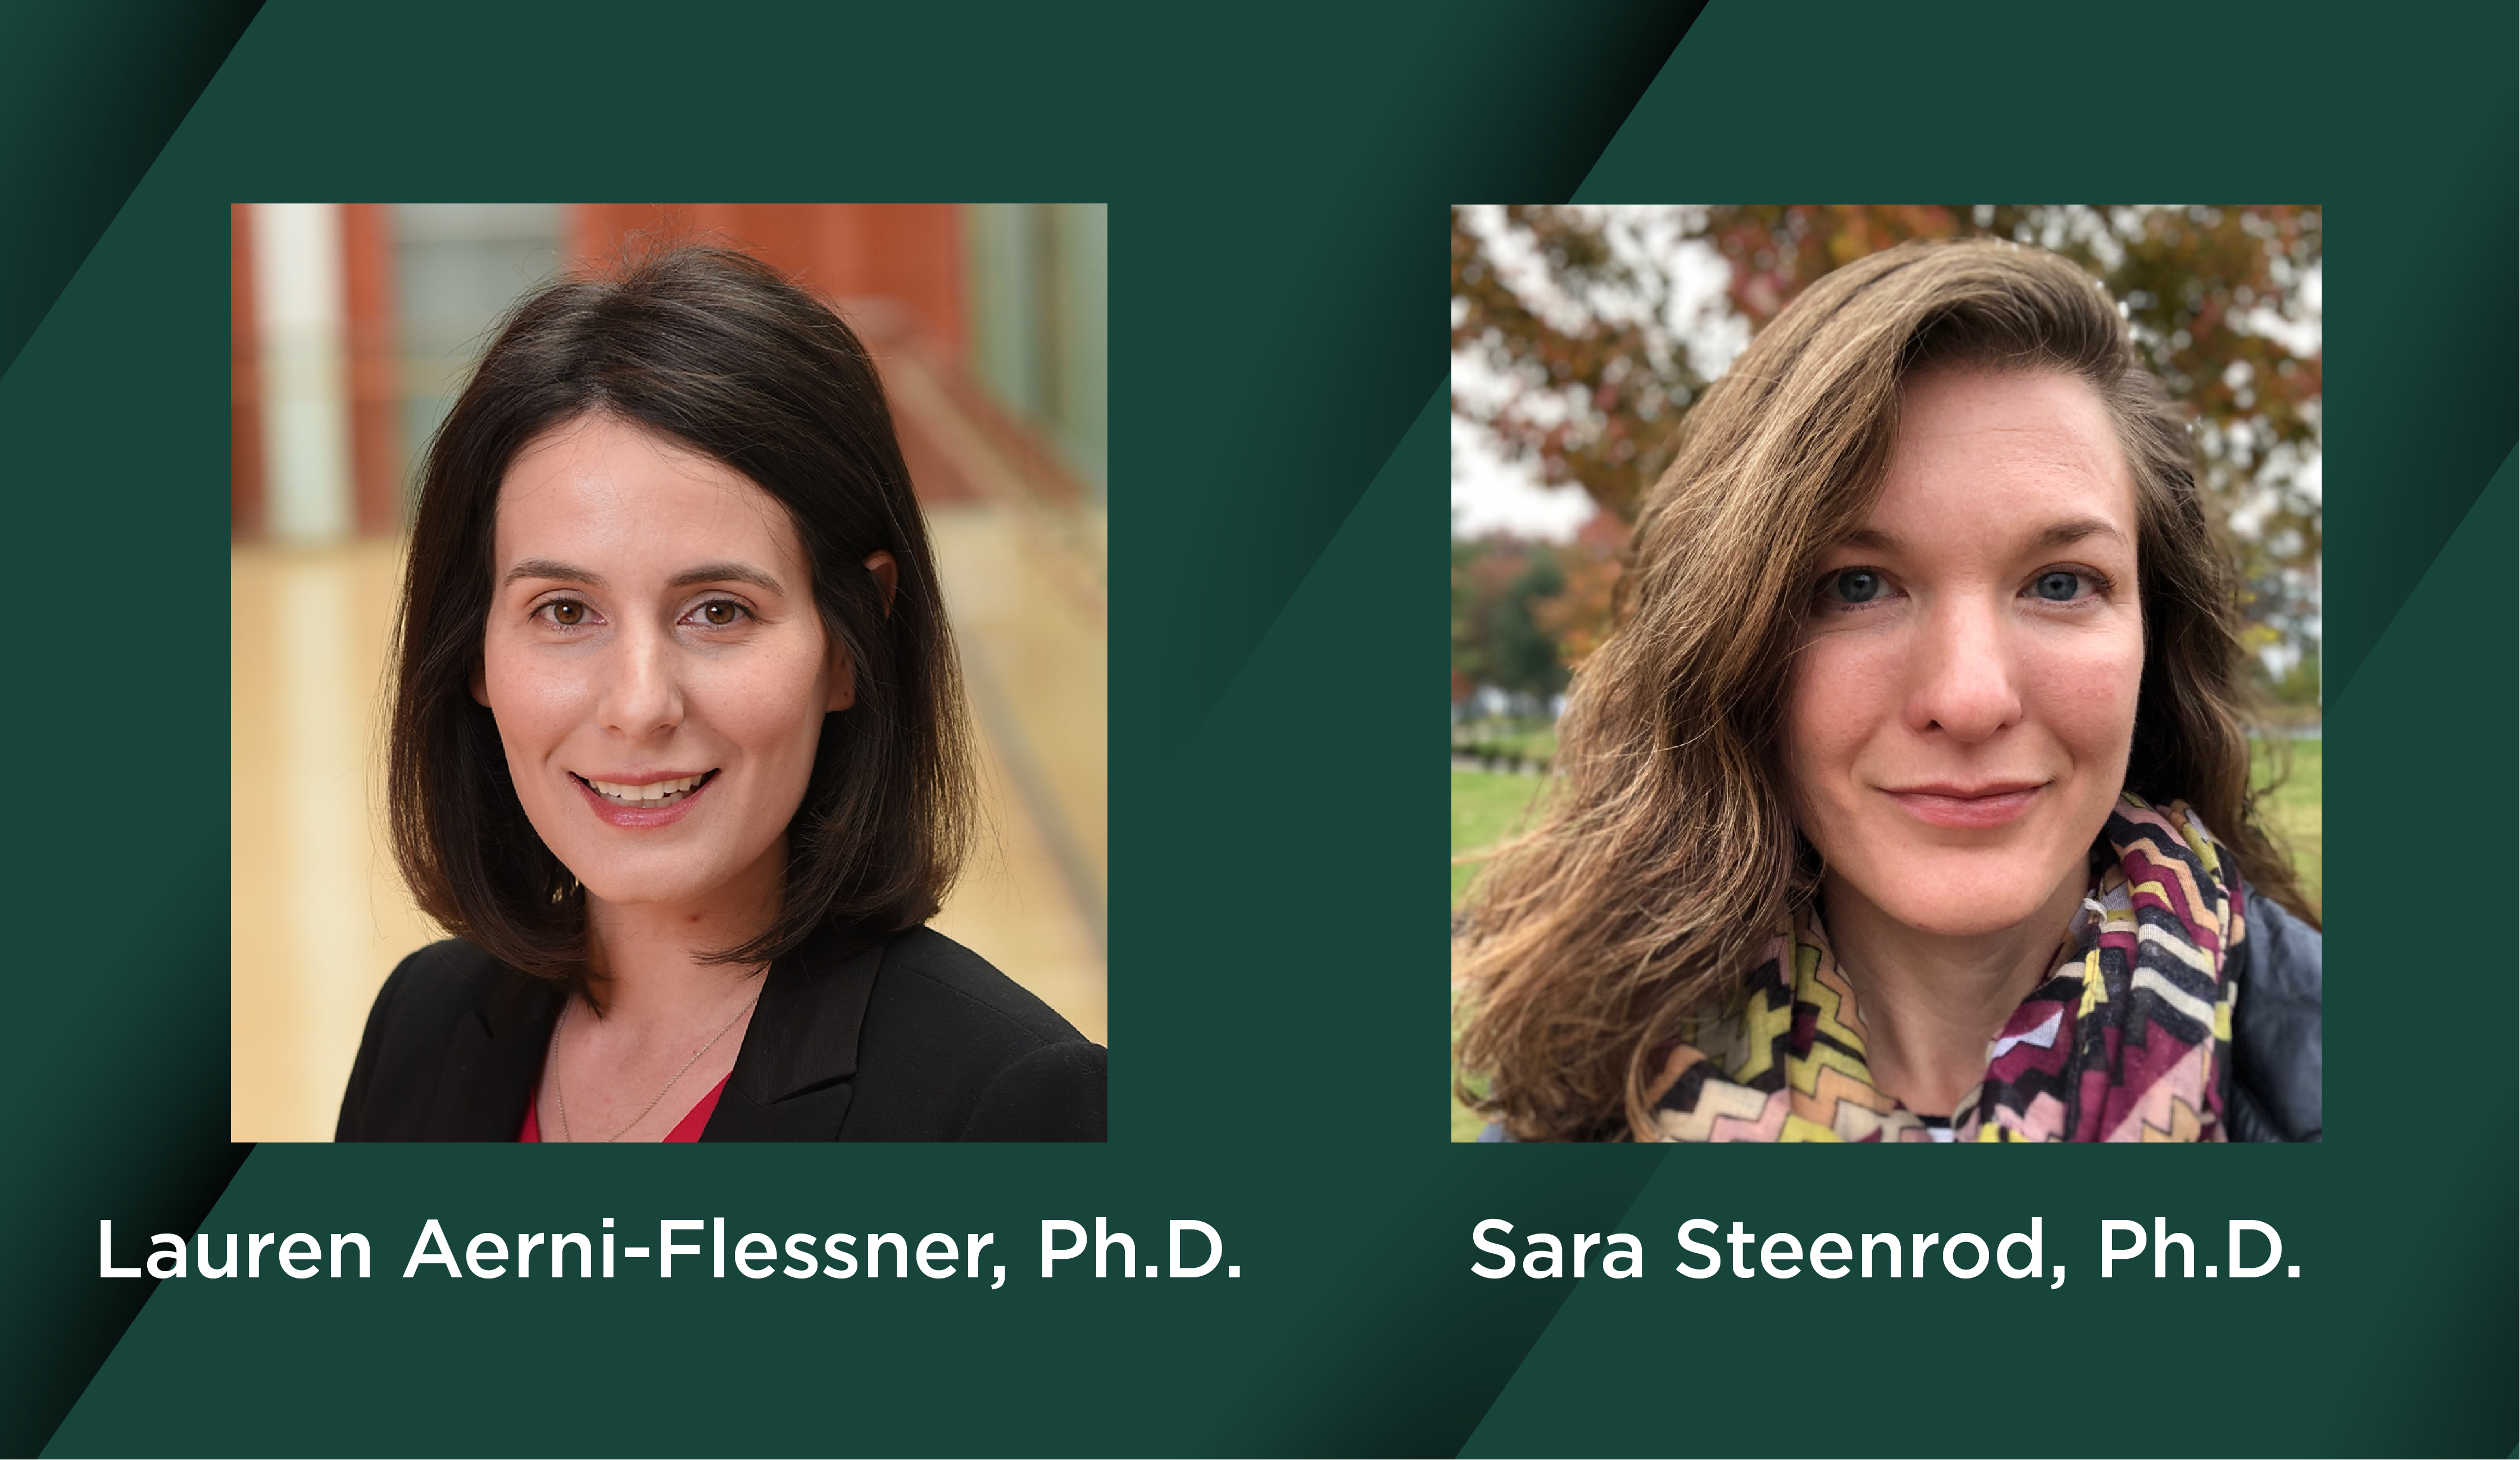 Left, Lauren Aerni-Flessner, Ph.D., a woman with dark brown hair. Right, Sara Steenrod, Ph.D., a woman with light brown hair